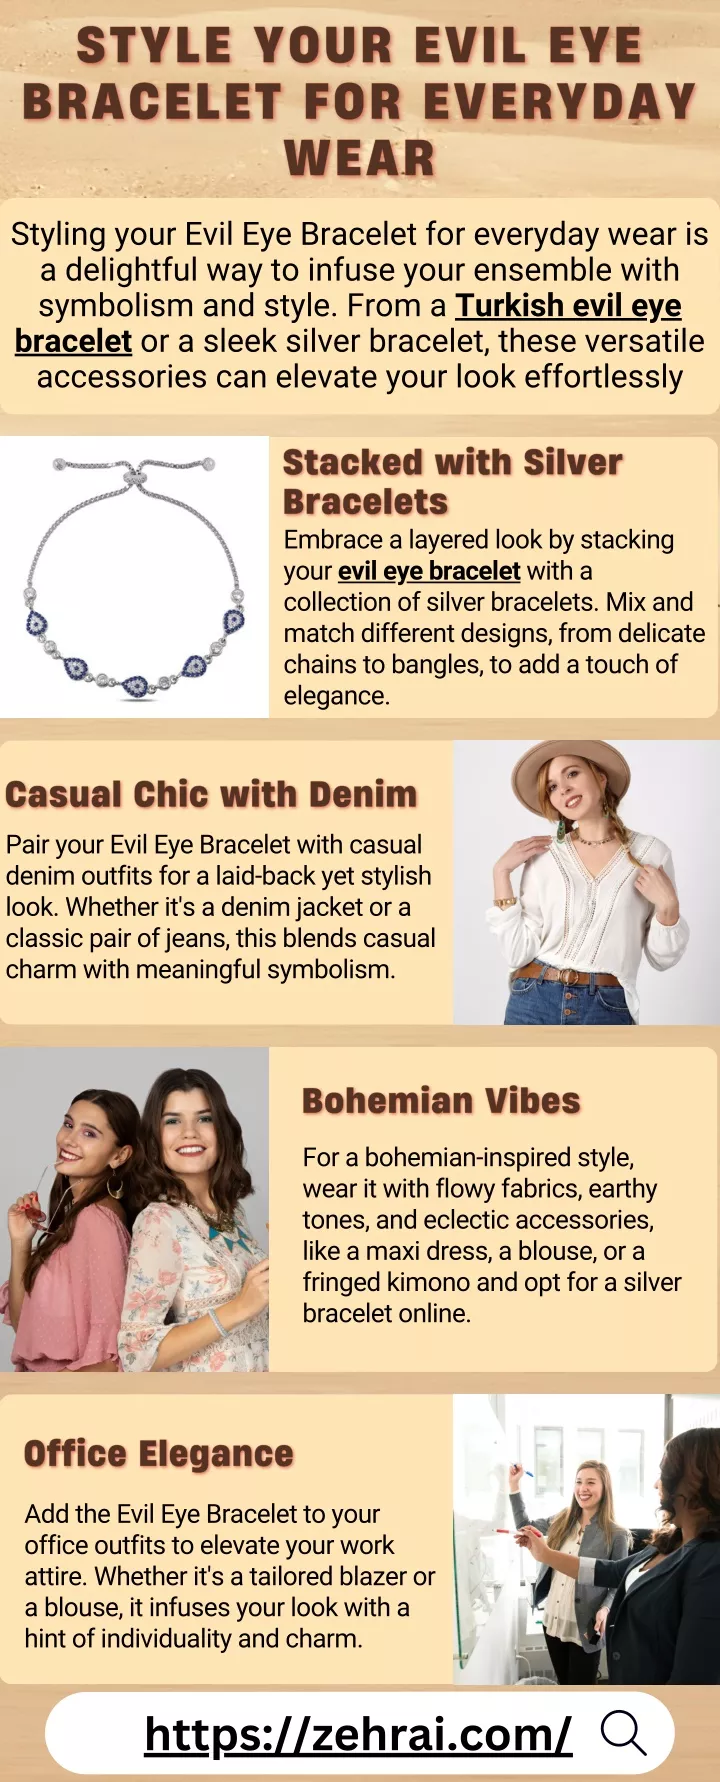 styling your evil eye bracelet for everyday wear